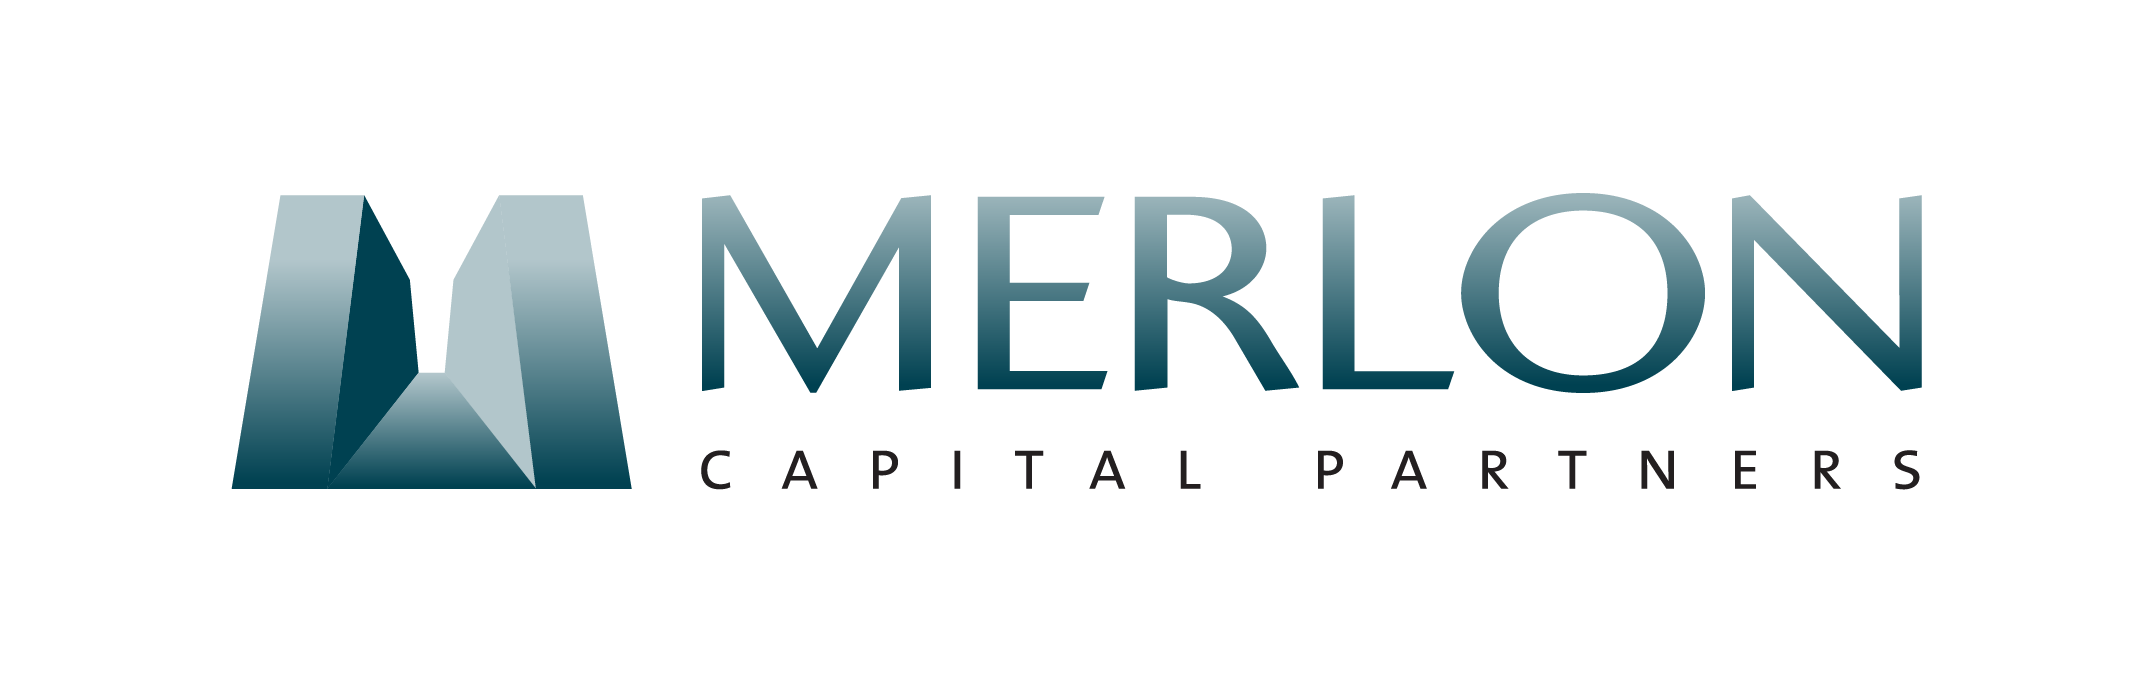 Merlon Capital